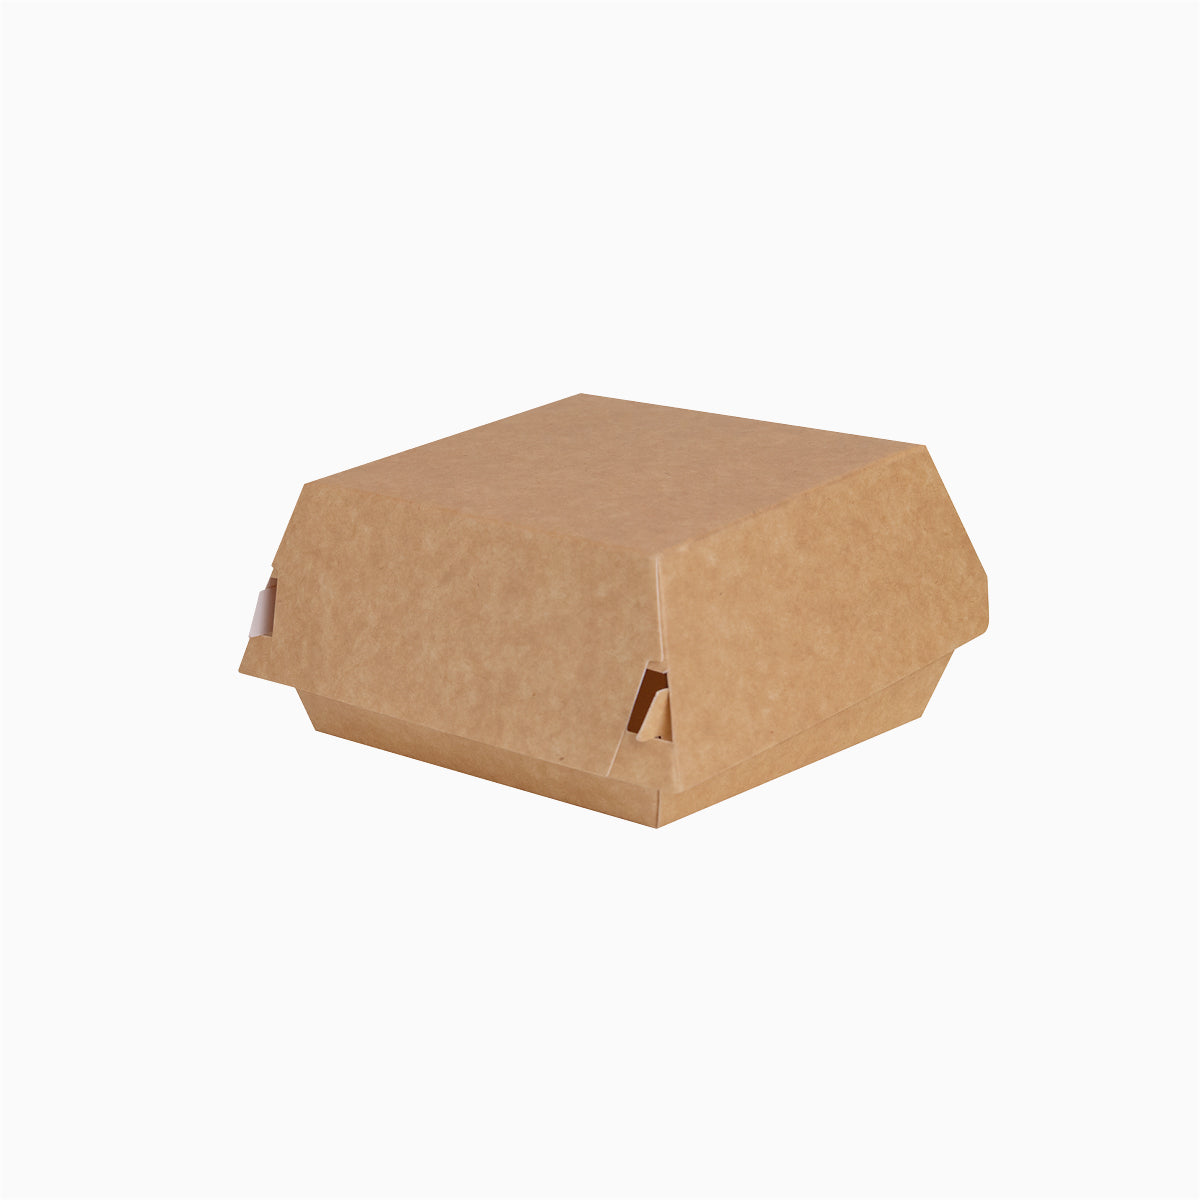 Hamburger box medium cardboard